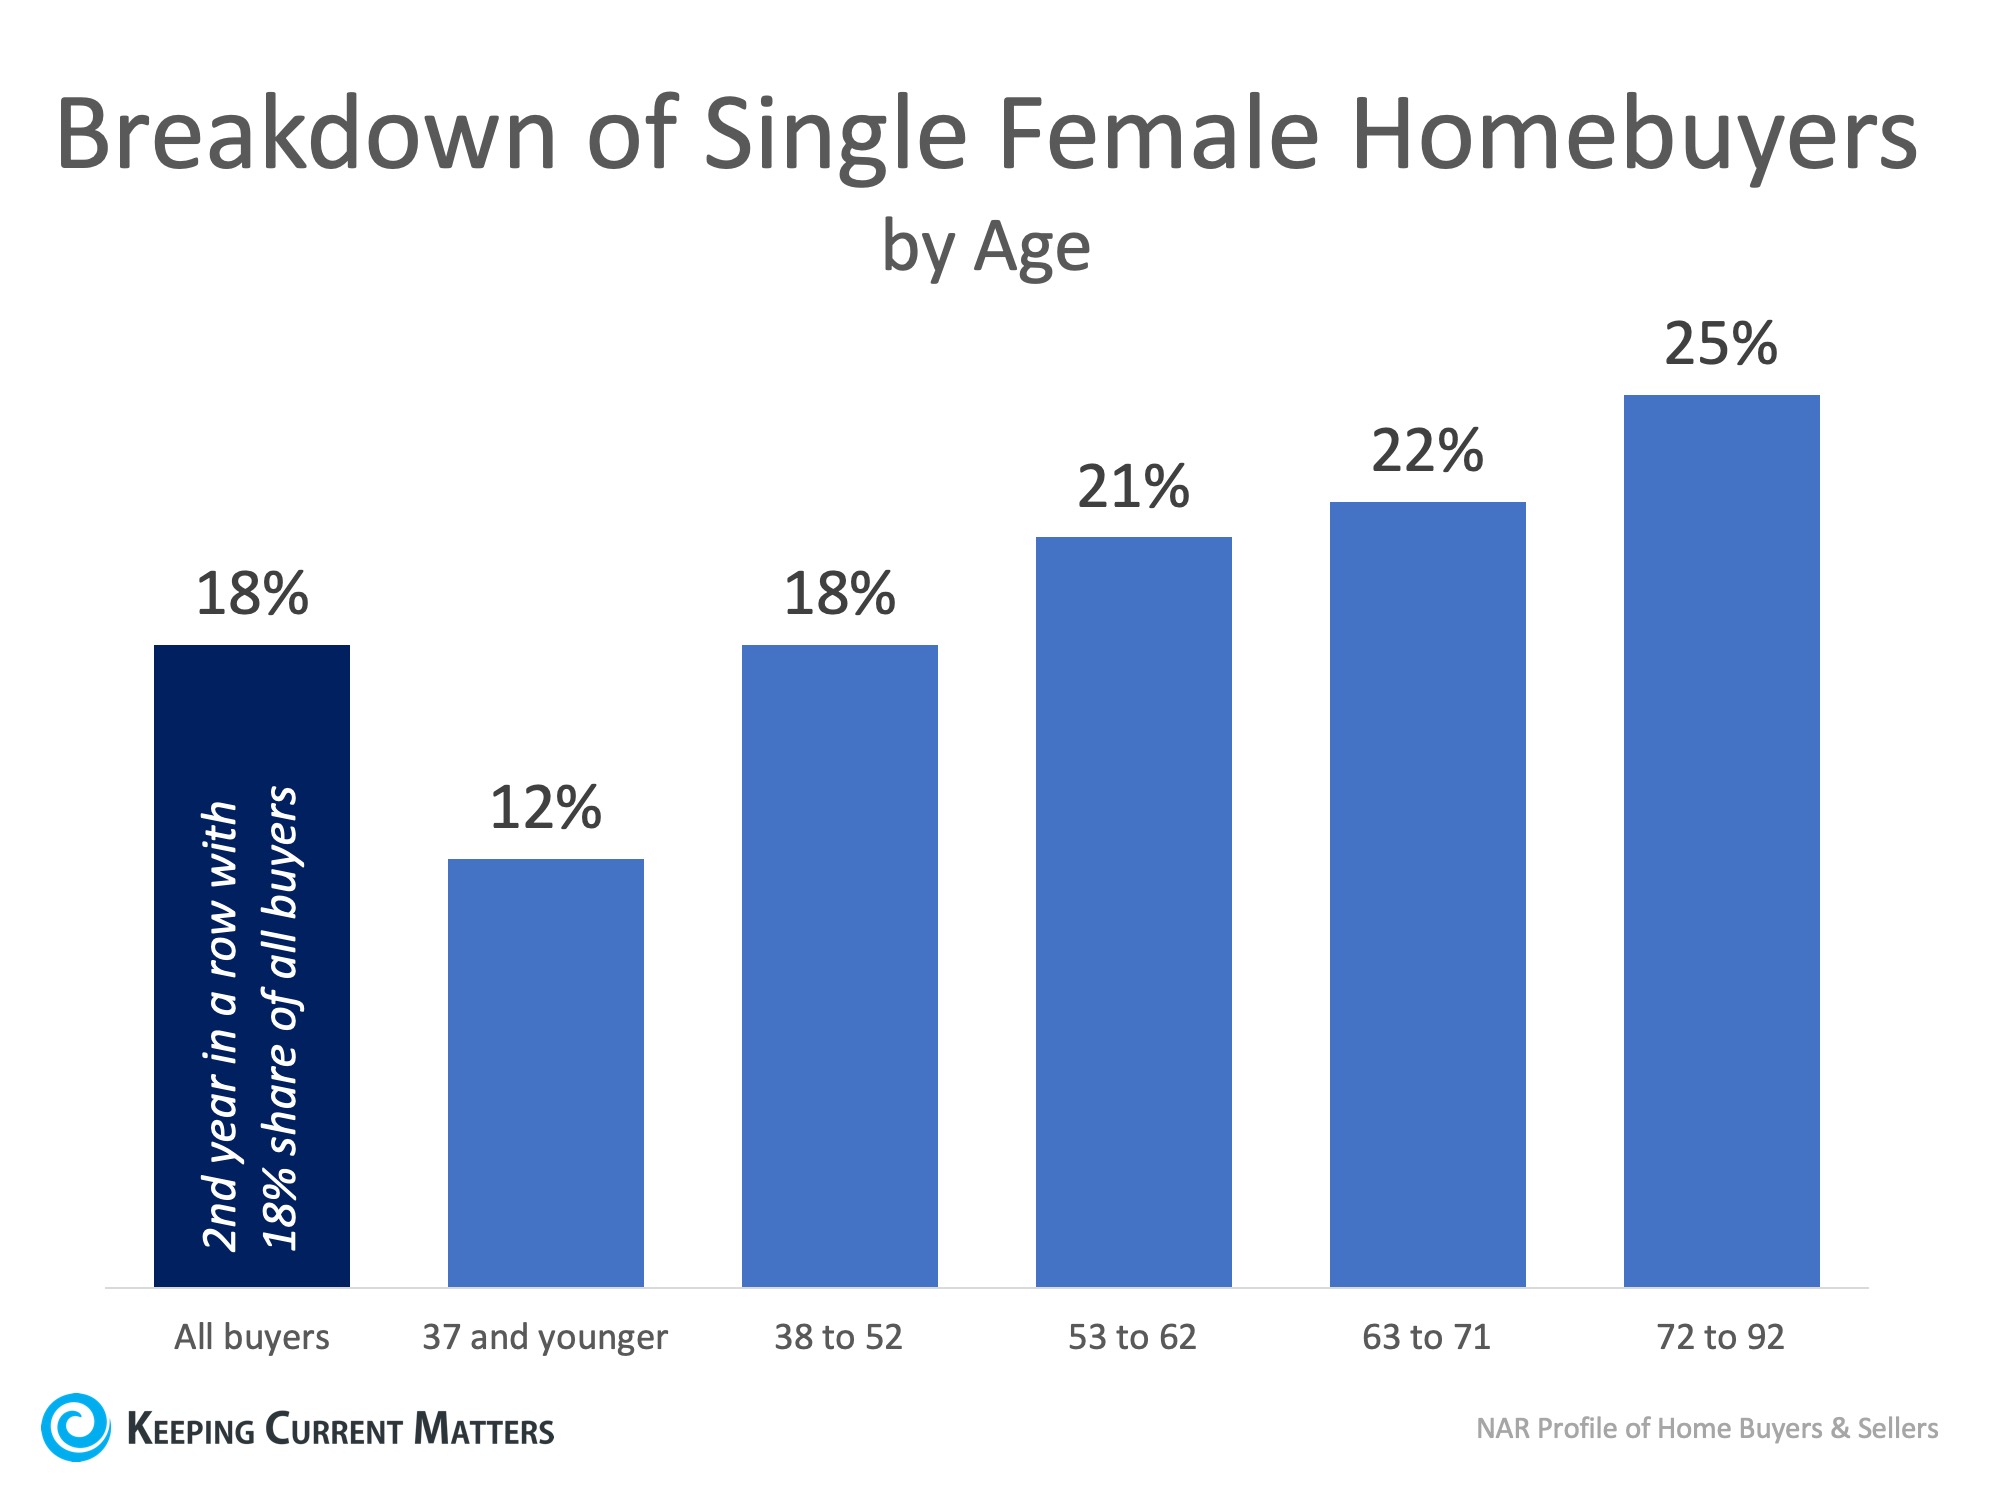 Breakdown of Single Female Homebuyers by Age